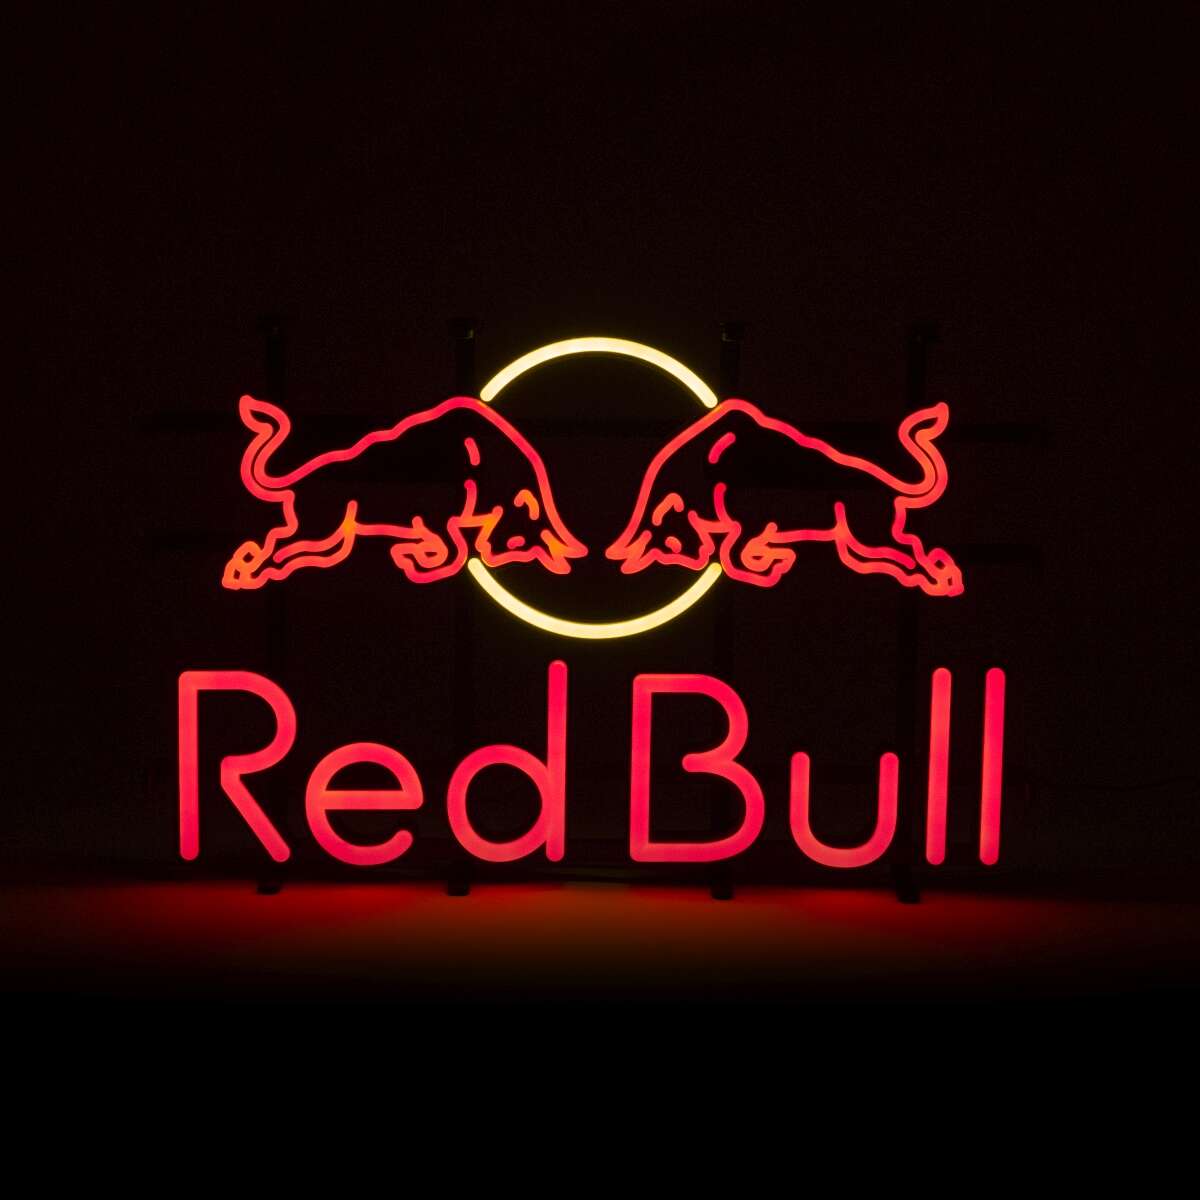 Red Bull Energy Leuchtreklame 52x35cm Neon LED Schild Wand